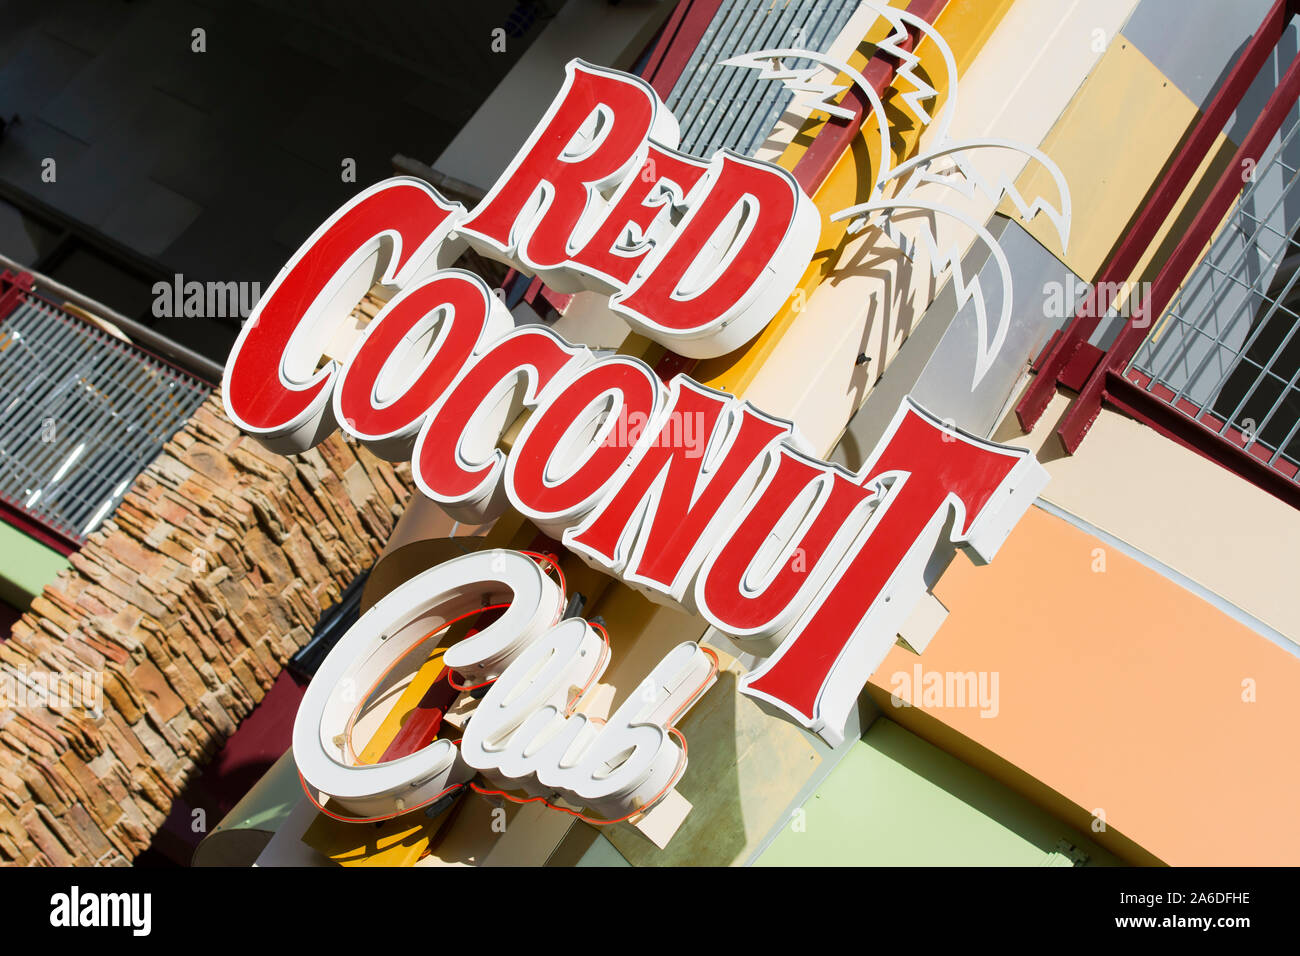 Red Club di cocco segno, nightclub, bar, lounge a CityWalk, Universal Studios Orlando, Florida, Stati Uniti d'America Foto Stock